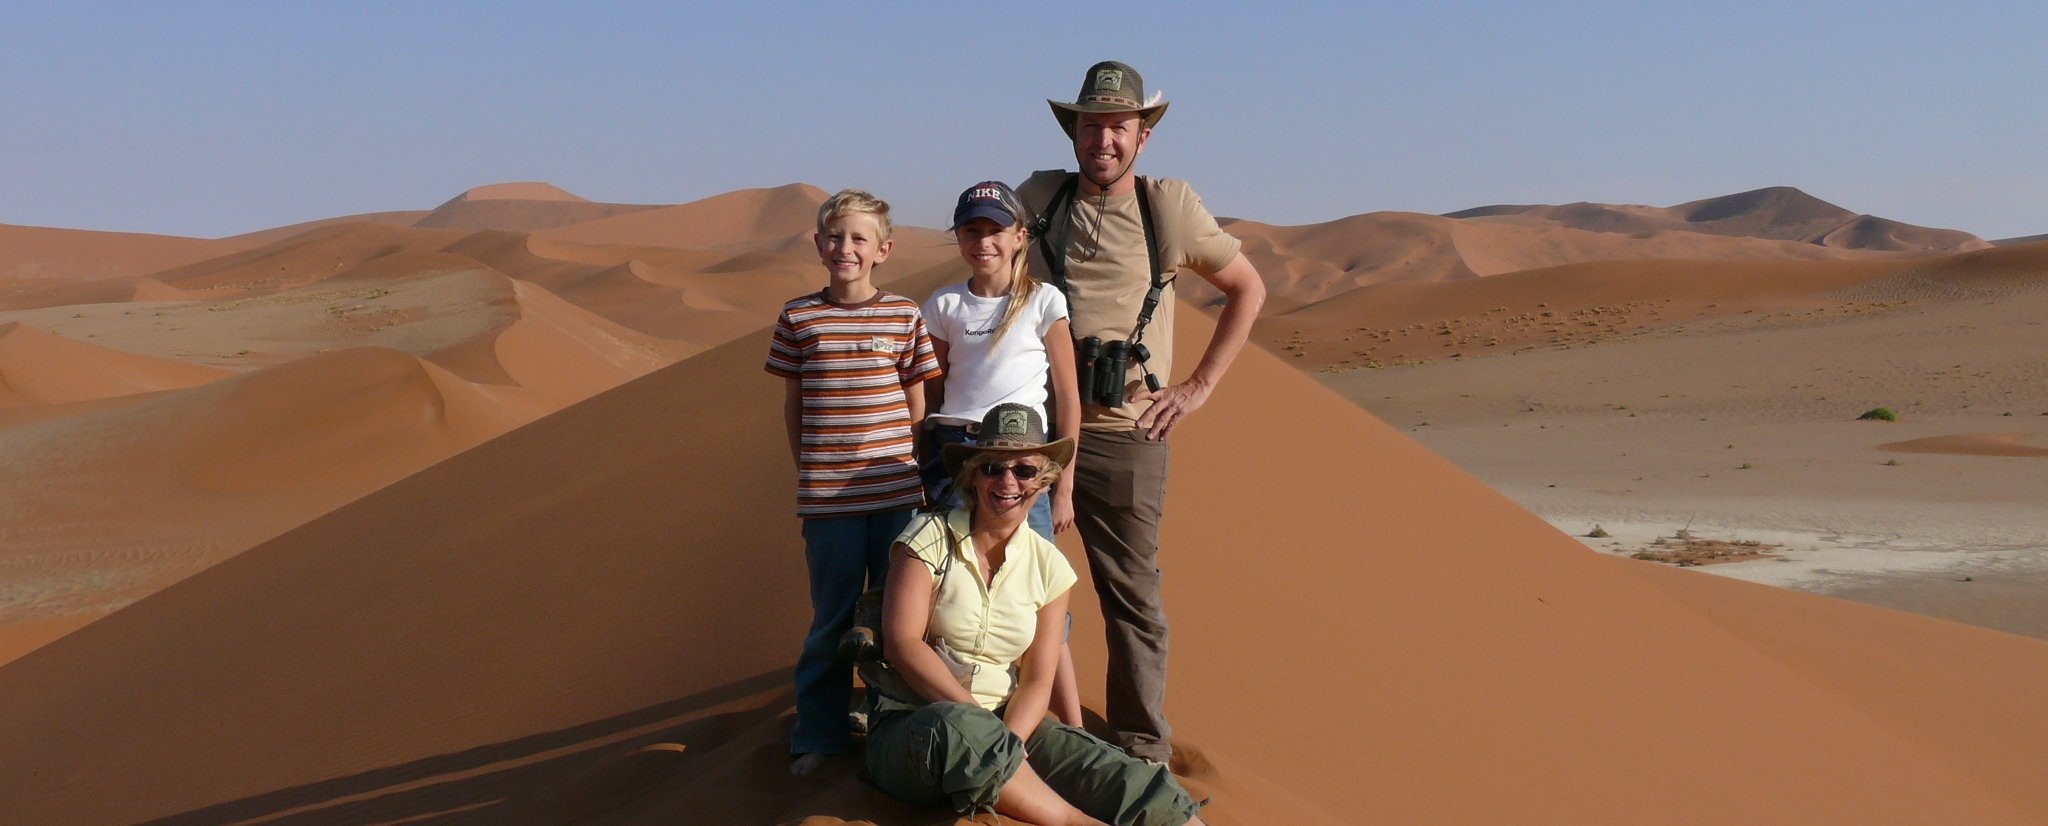 Familienreise Namibia - Familie in der Wüste